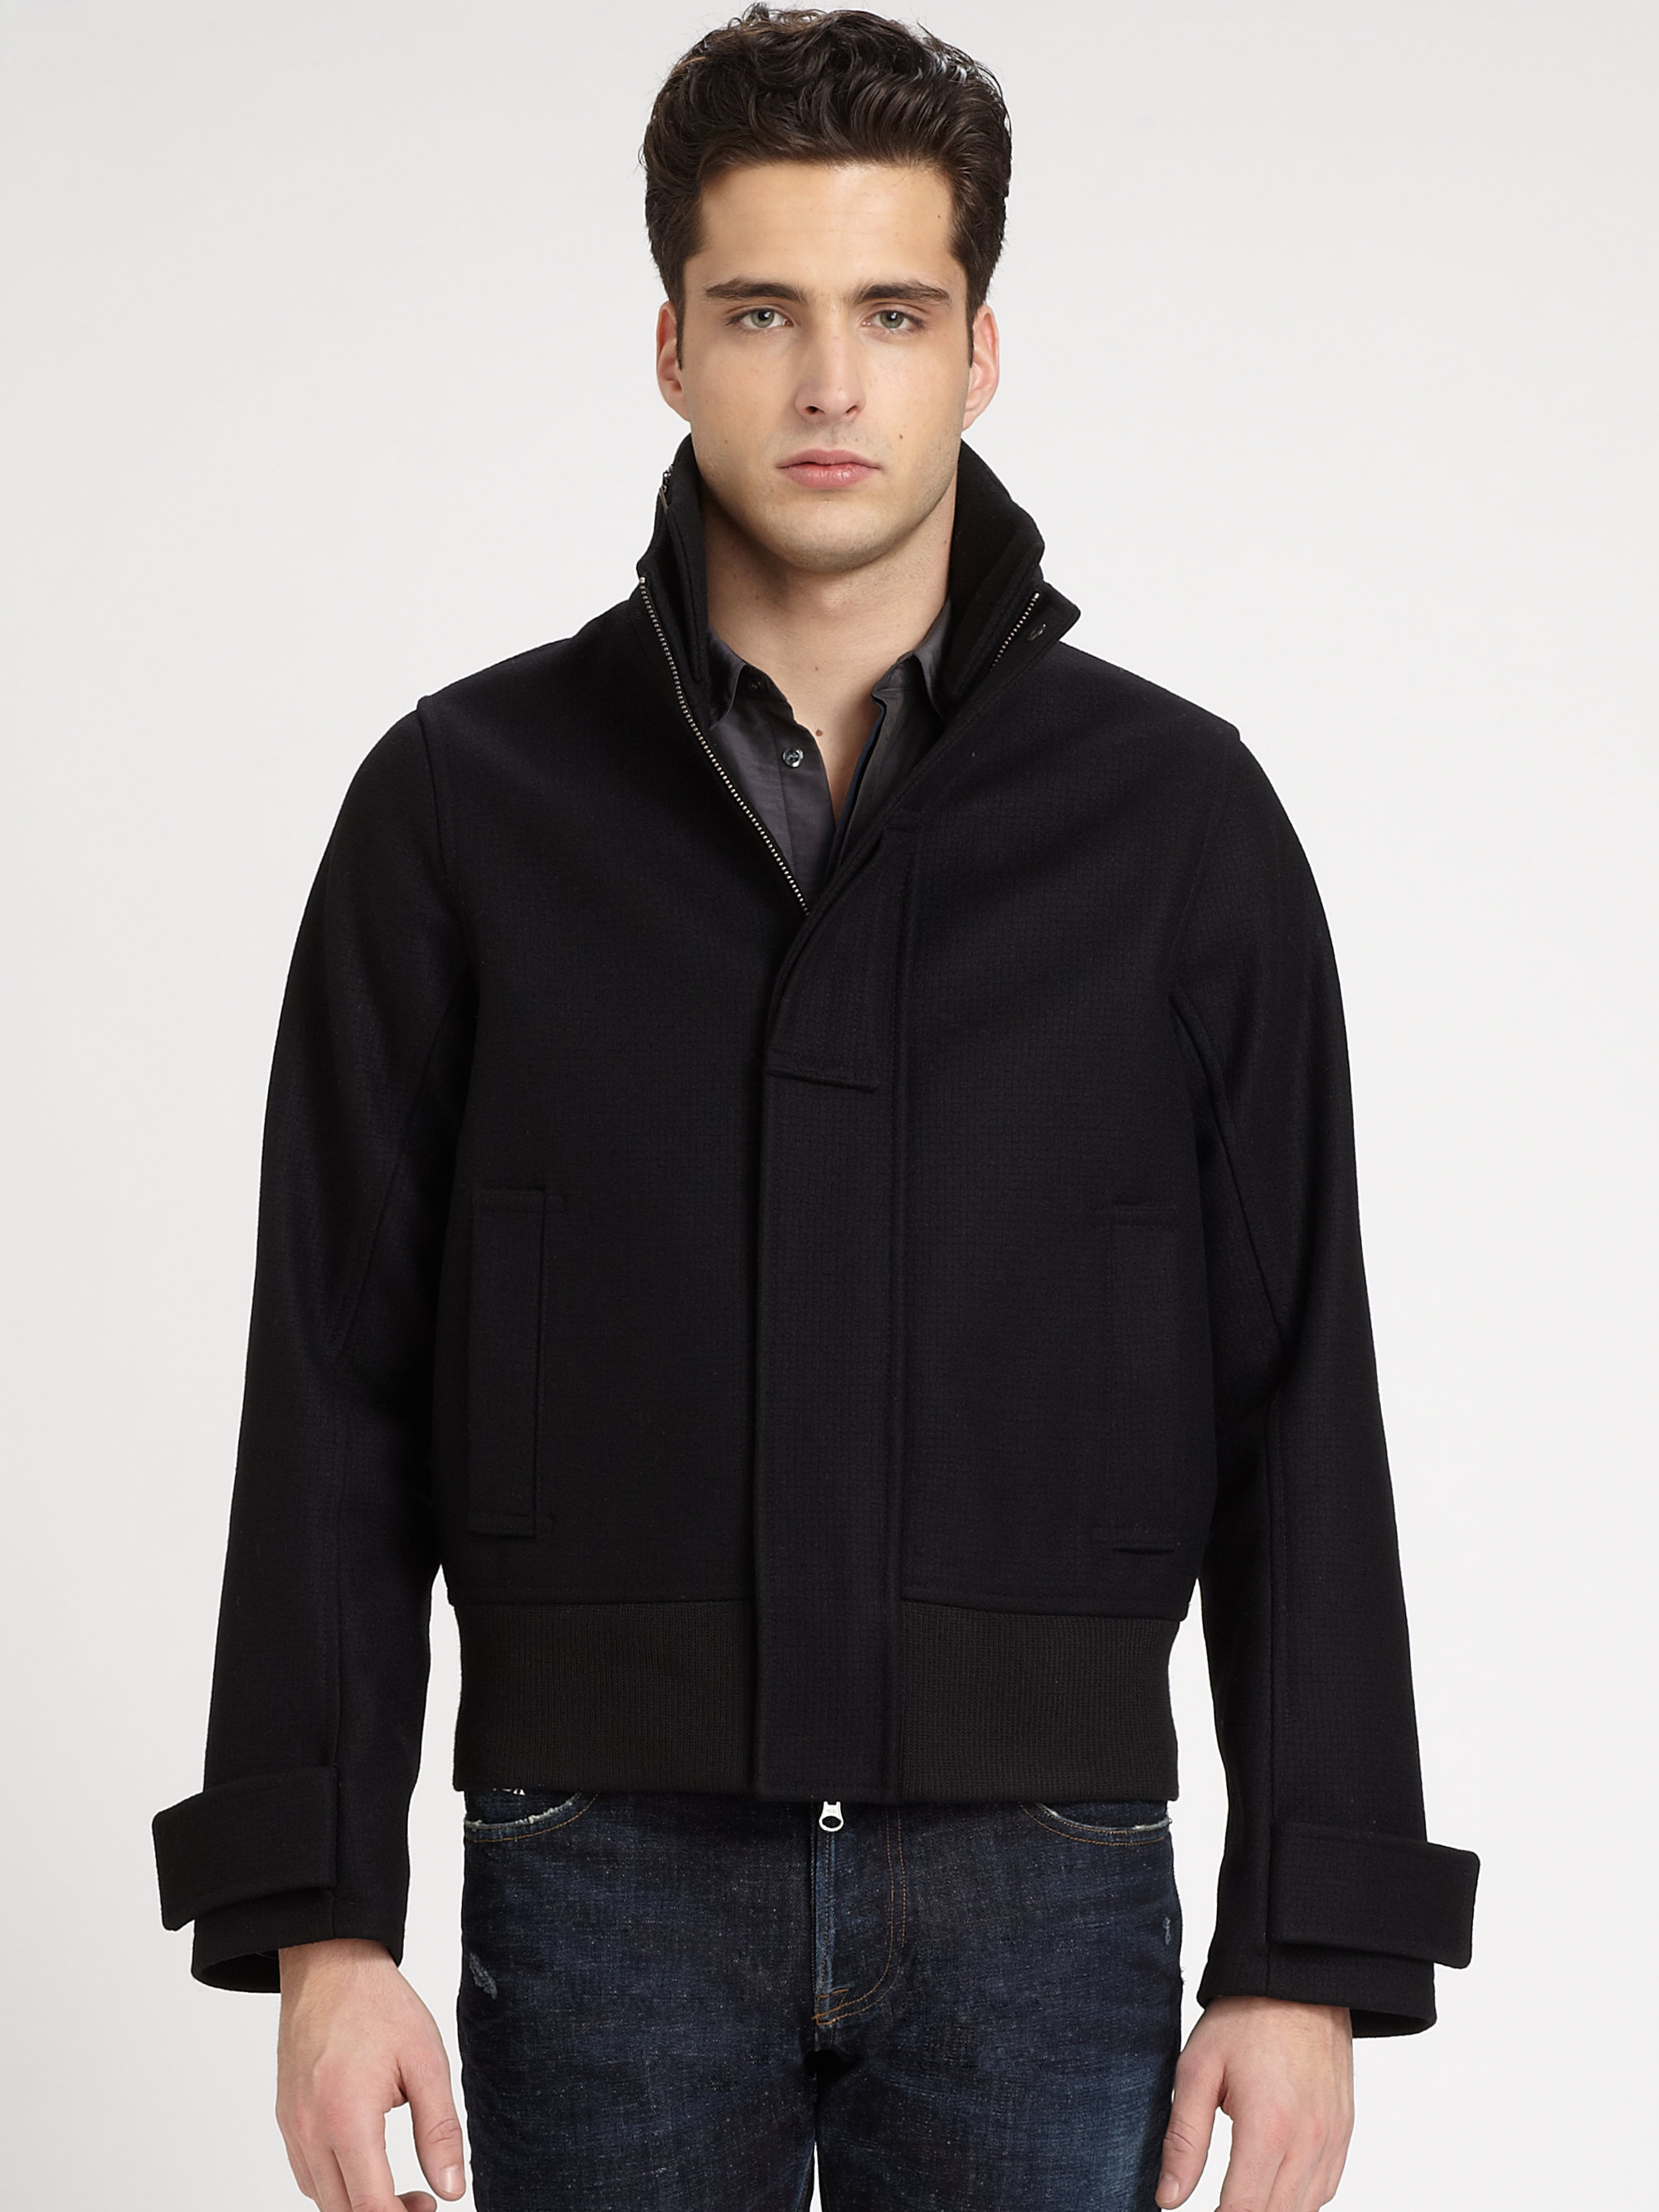 Lyst - Emporio Armani Wool Felt Blouson Jacket in Black for Men